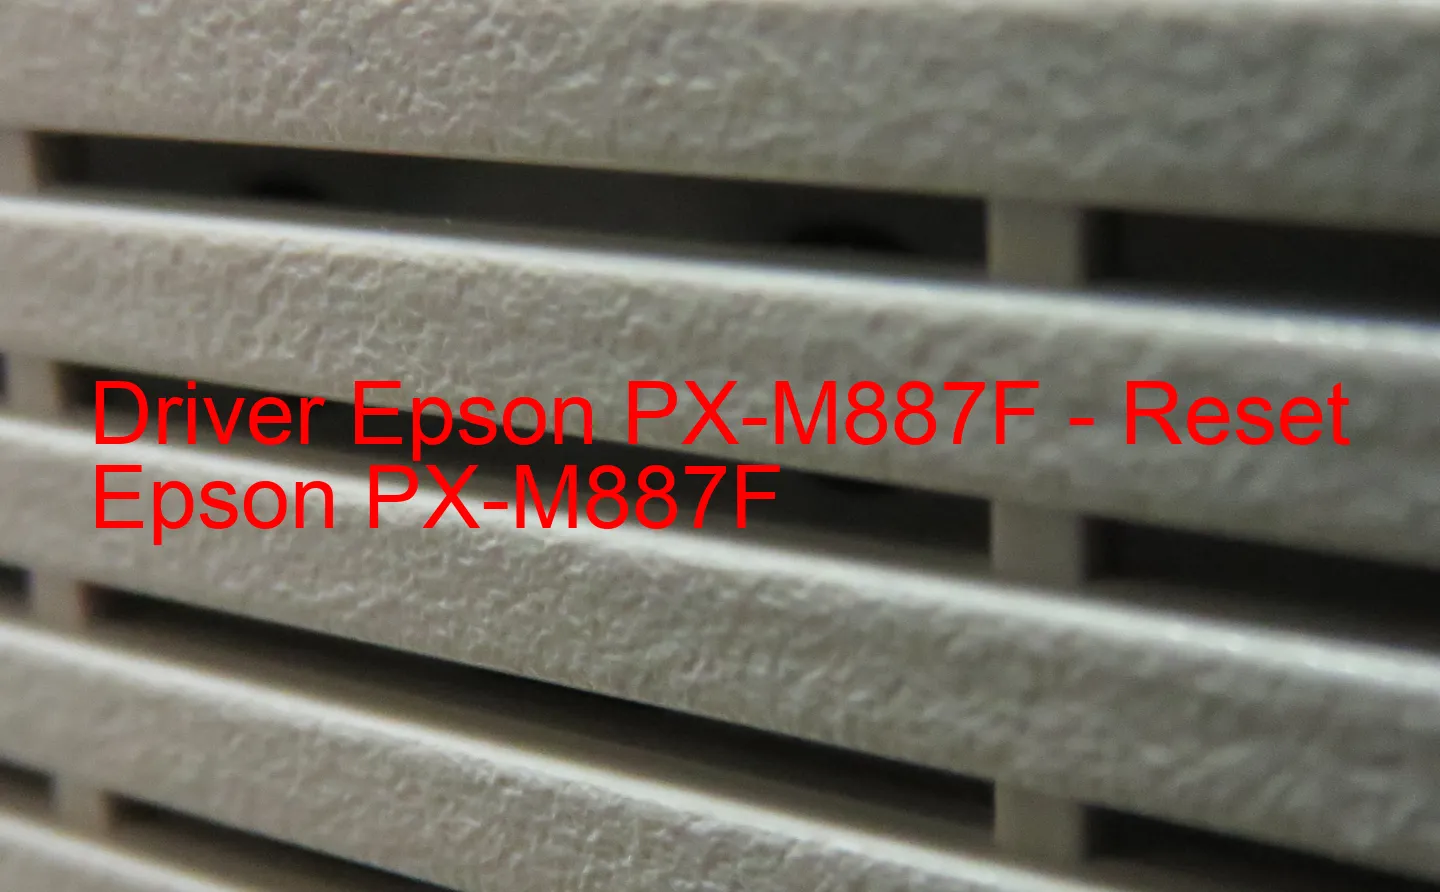 Epson PX-M887Fのドライバー、Epson PX-M887Fのリセットソフトウェア